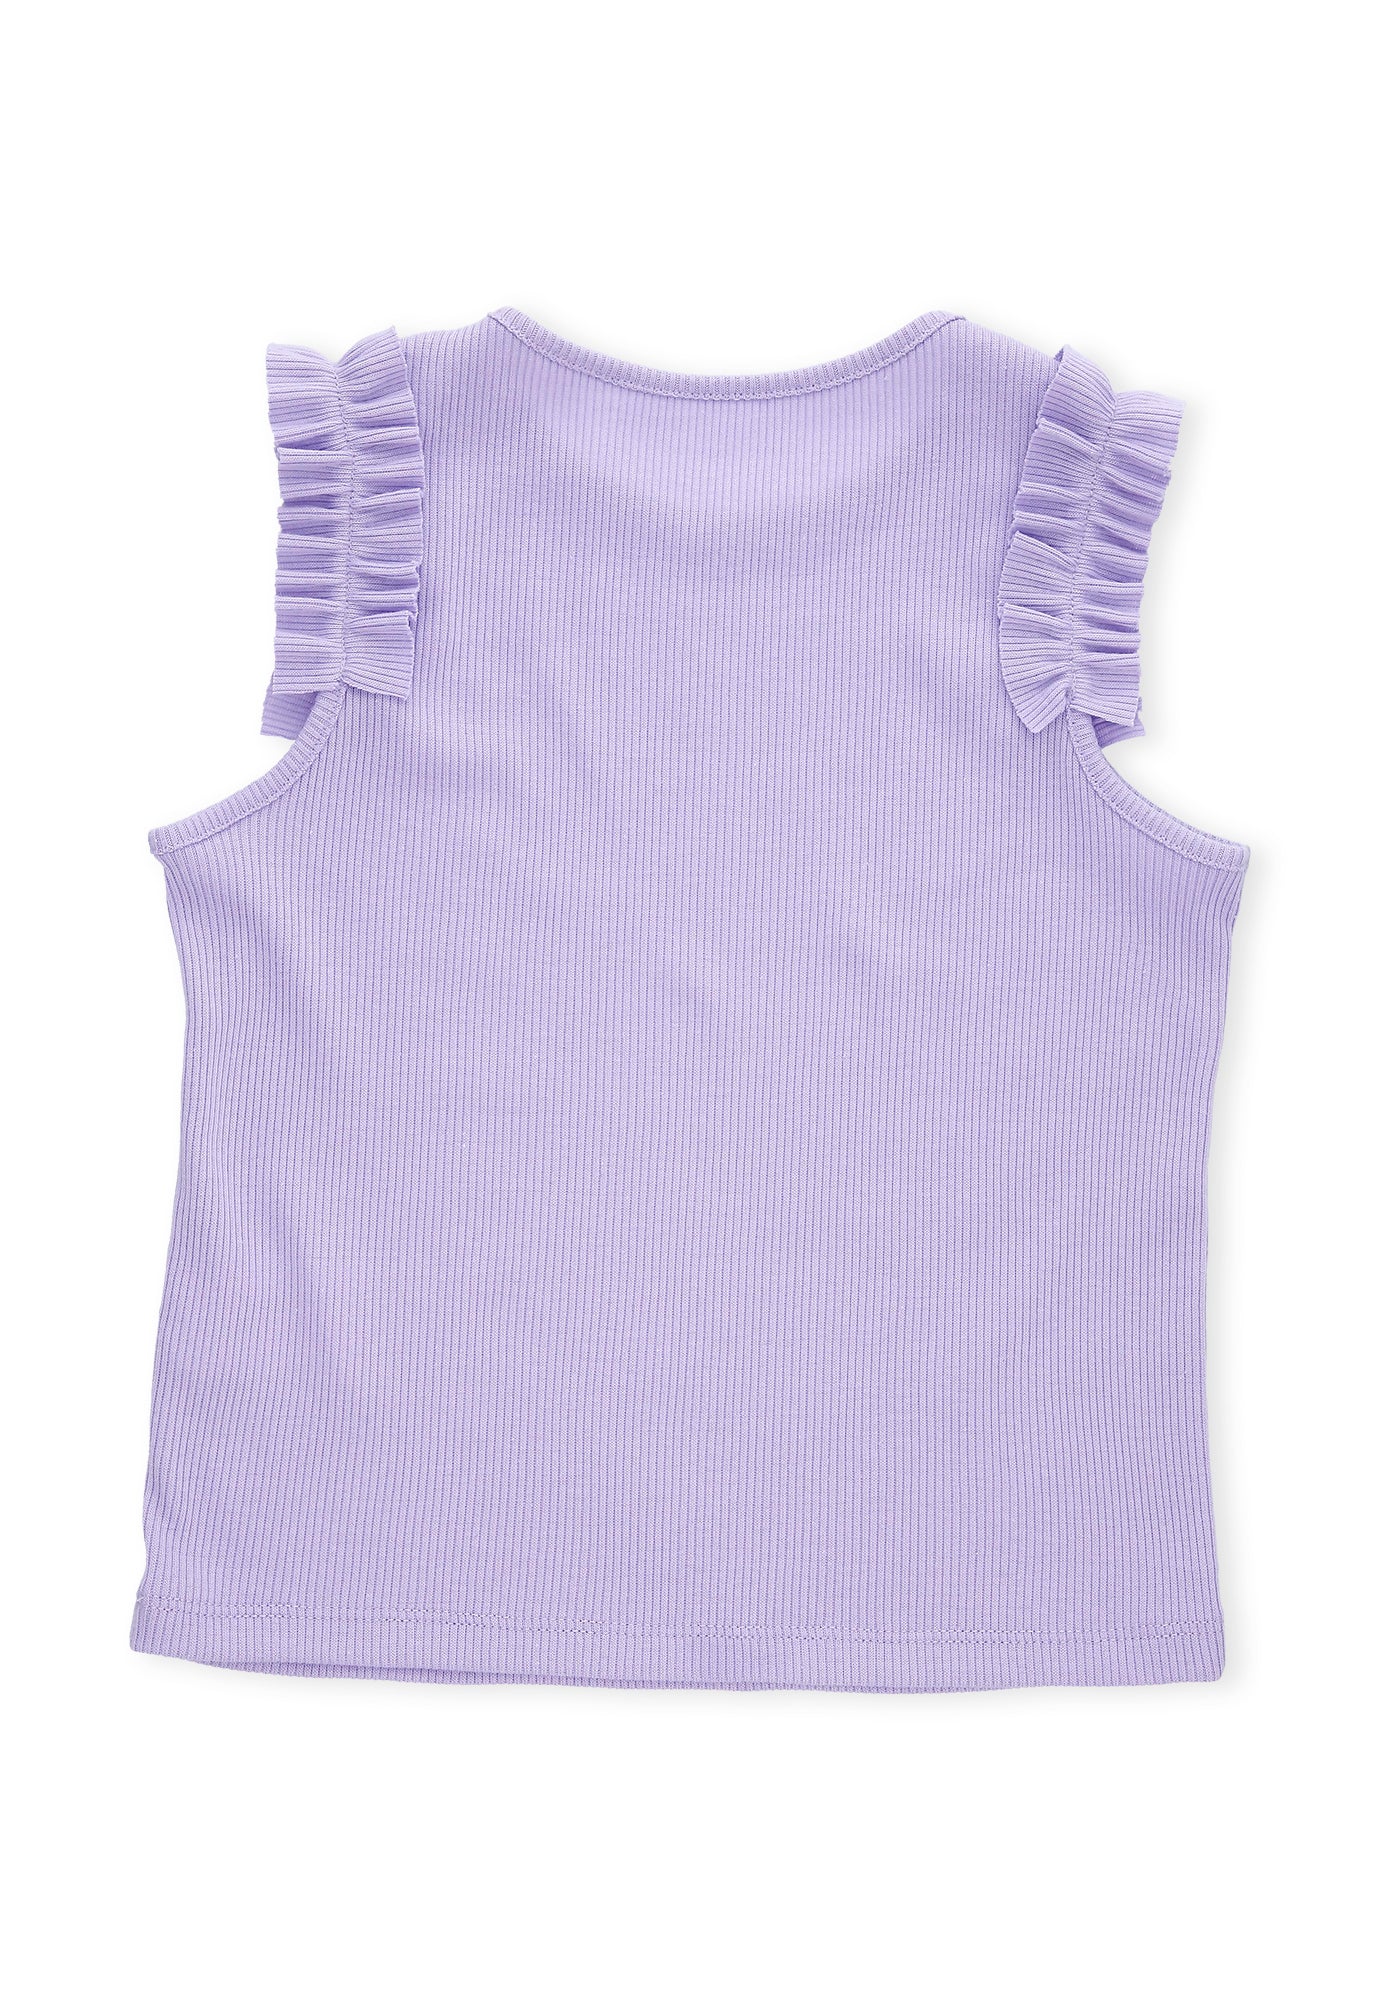 Camiseta morado lavanda manga sisa en boleros para bebé niña